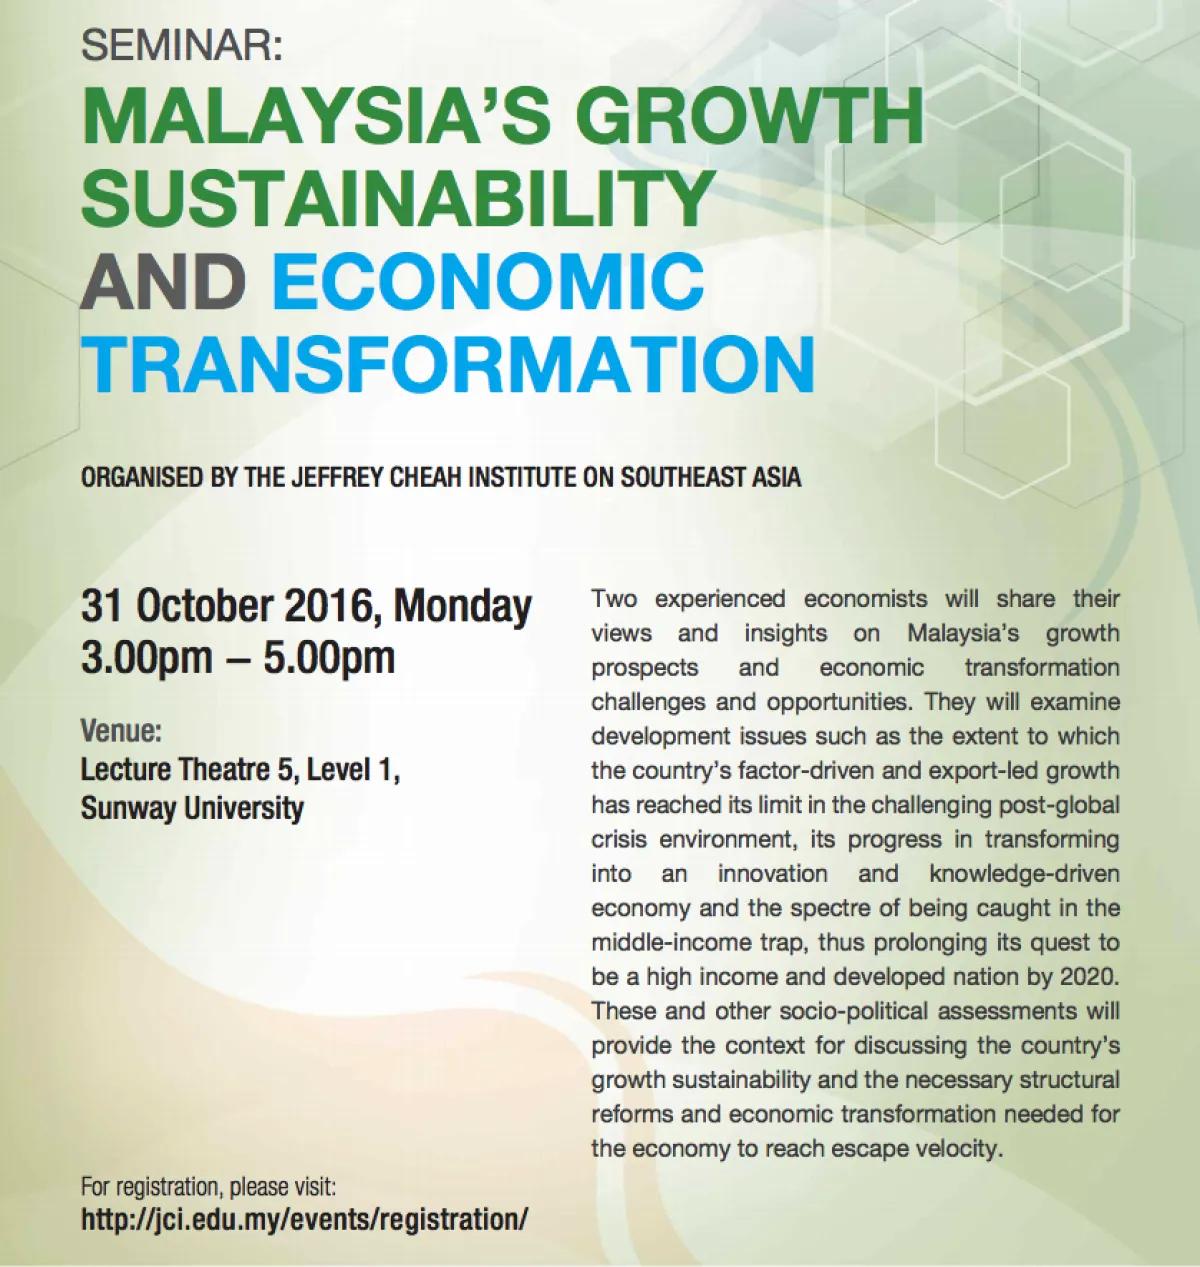 Seminar: Malaysia's Growth Sustainability and Economic Transformation